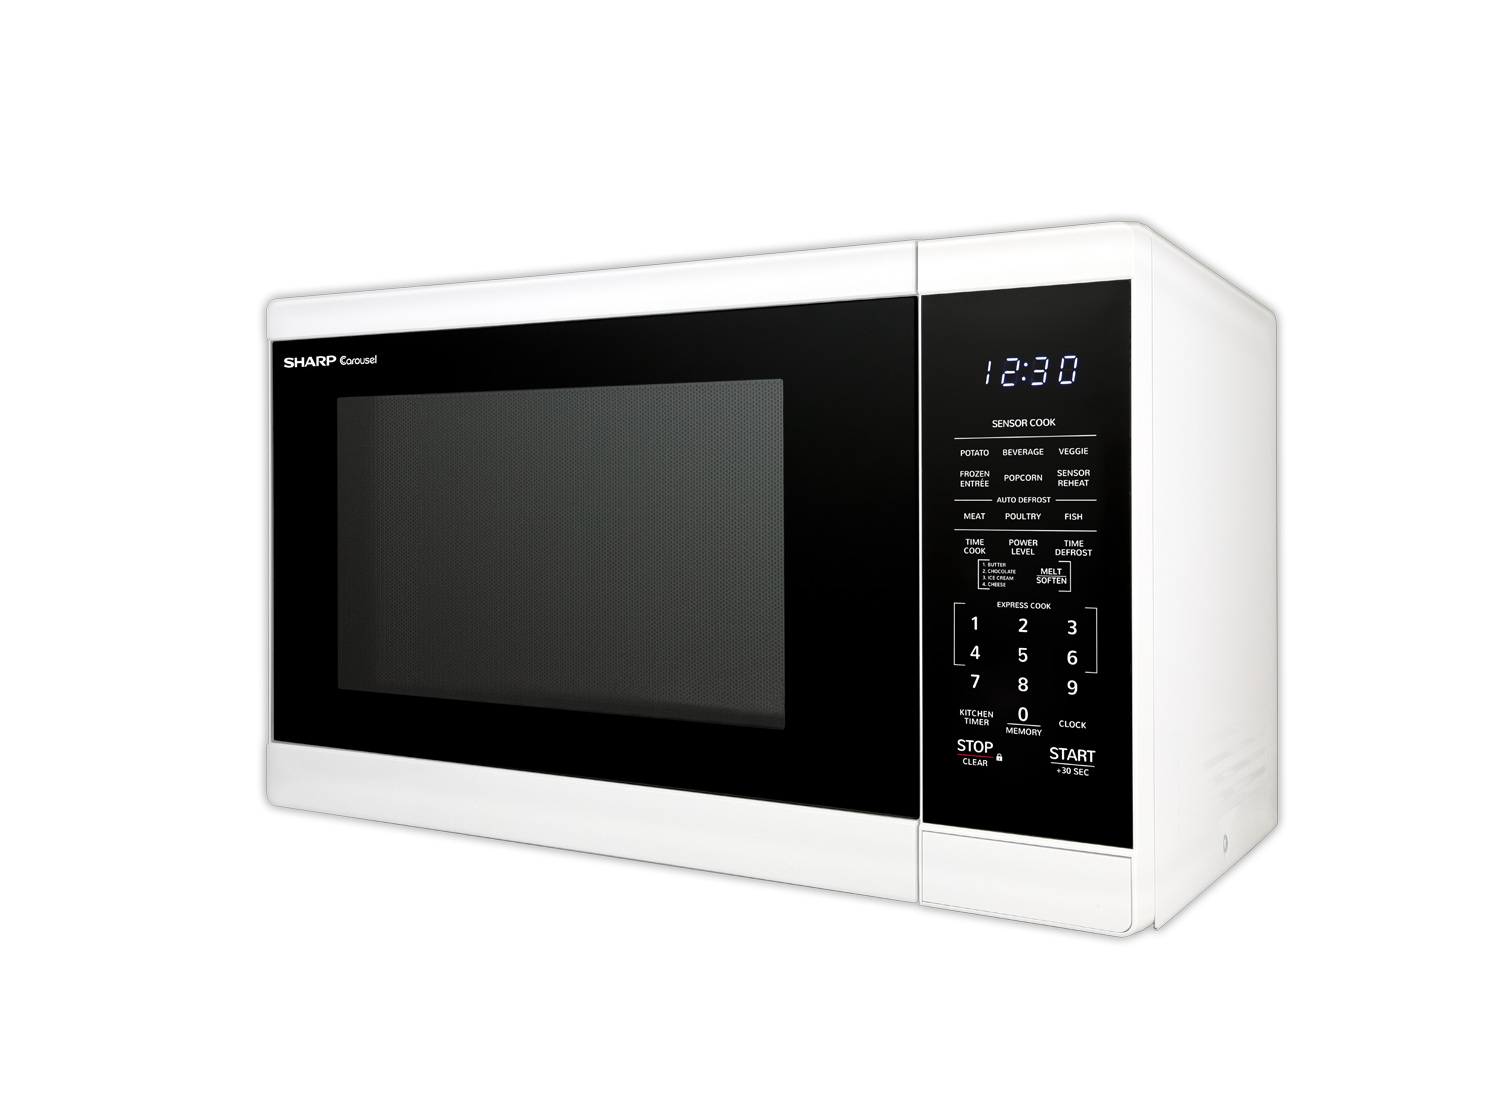 Sharp SMC1461HW 1.4 Cu ft. White Countertop Microwave Oven